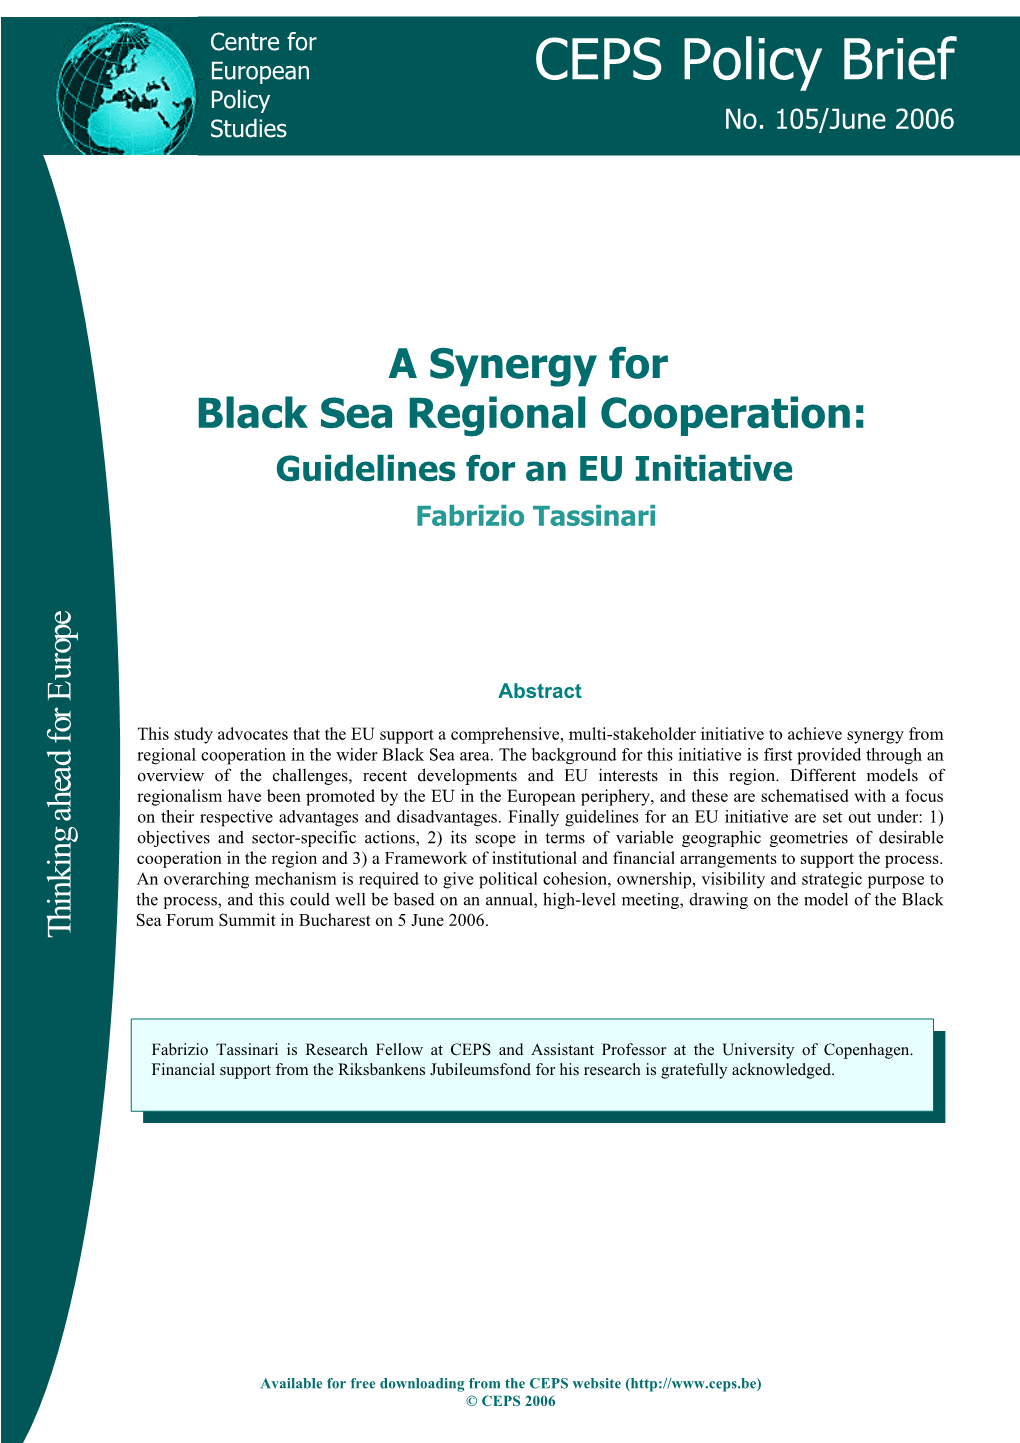 A Synergy for Black Sea Regional Cooperation: Guidelines for an EU Initiative Fabrizio Tassinari